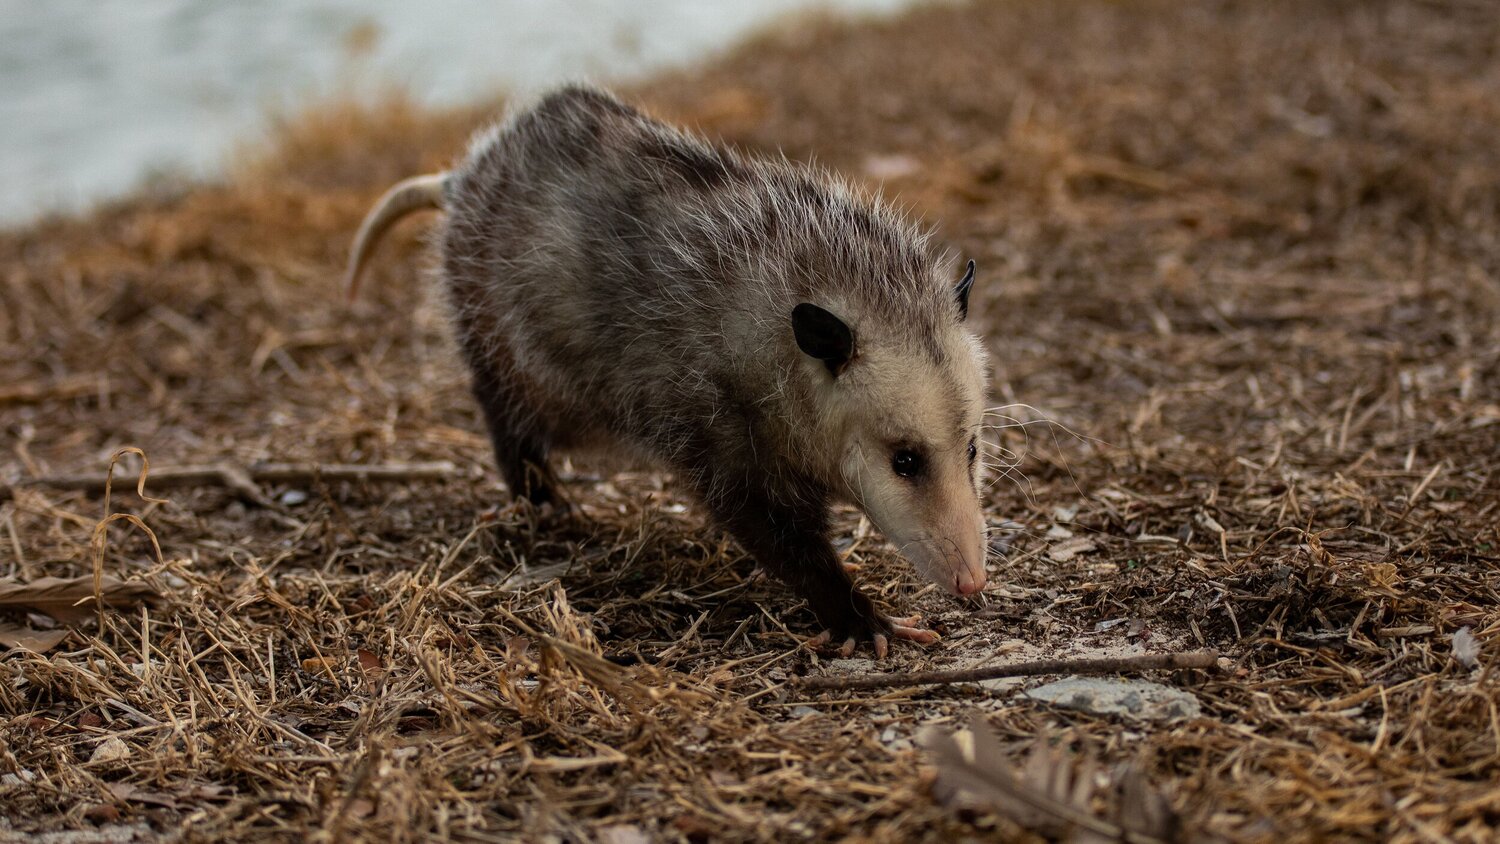 A ratty old possum nosing around on the ground.